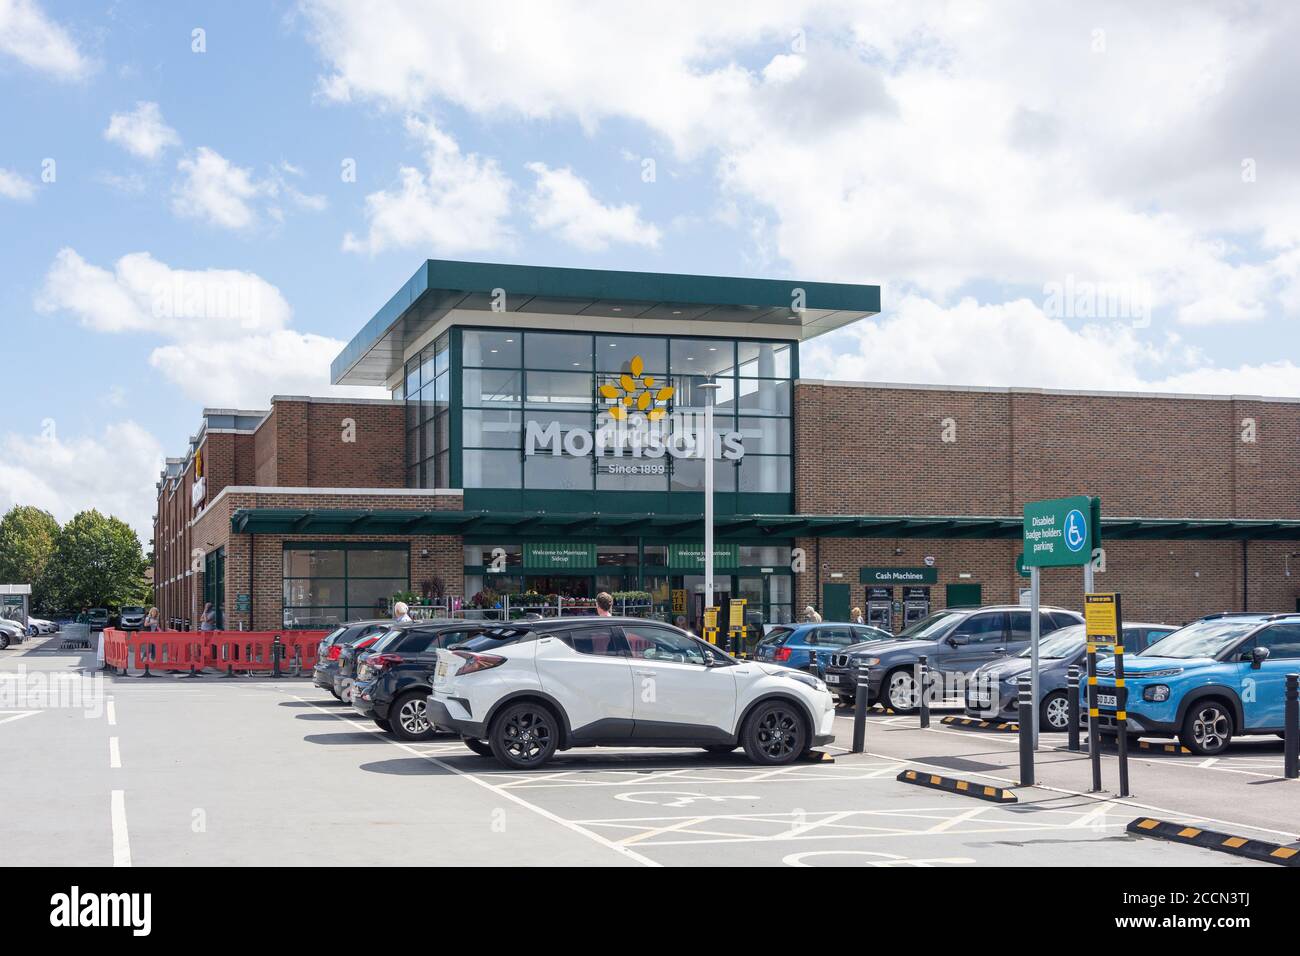 Eintritt zum Morrisons Supermarkt, Jenner Close, Sidcup, London Borough of Bexley, Greater London, England, Großbritannien Stockfoto